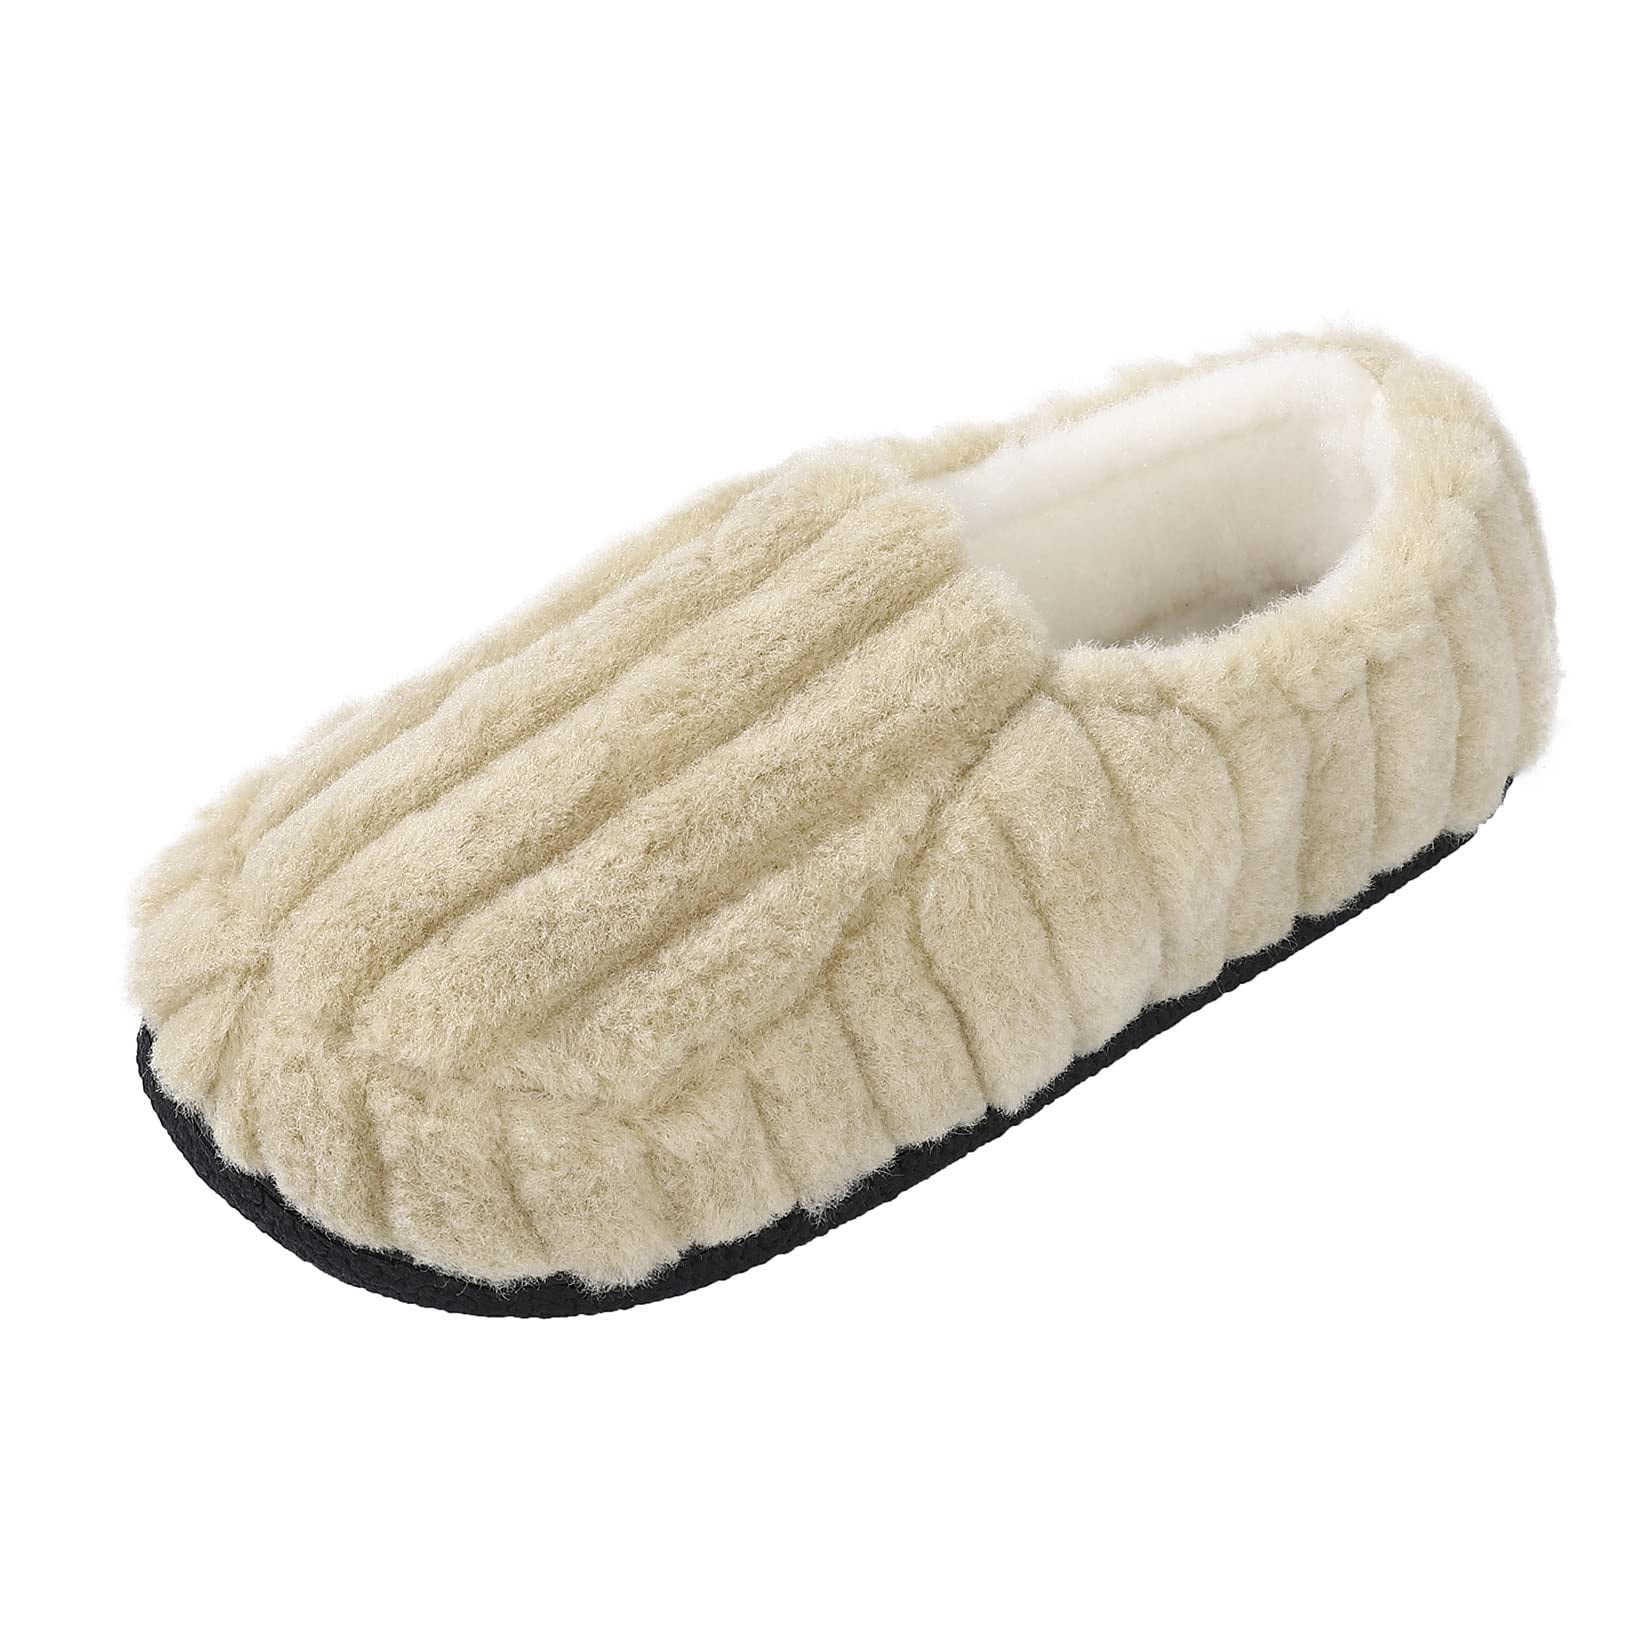 Women Memory Foam Slippers Comfy Plush Warm House Shoes Slip on Ladies Bedroom Flat Slippers for Indoor Outdoor Mint Green XL 11 12 35d5b3e6 d0c8 4e02 bebe 532b3d80d023.1fc1a4db0ddc744854ddba0c730d8cf9